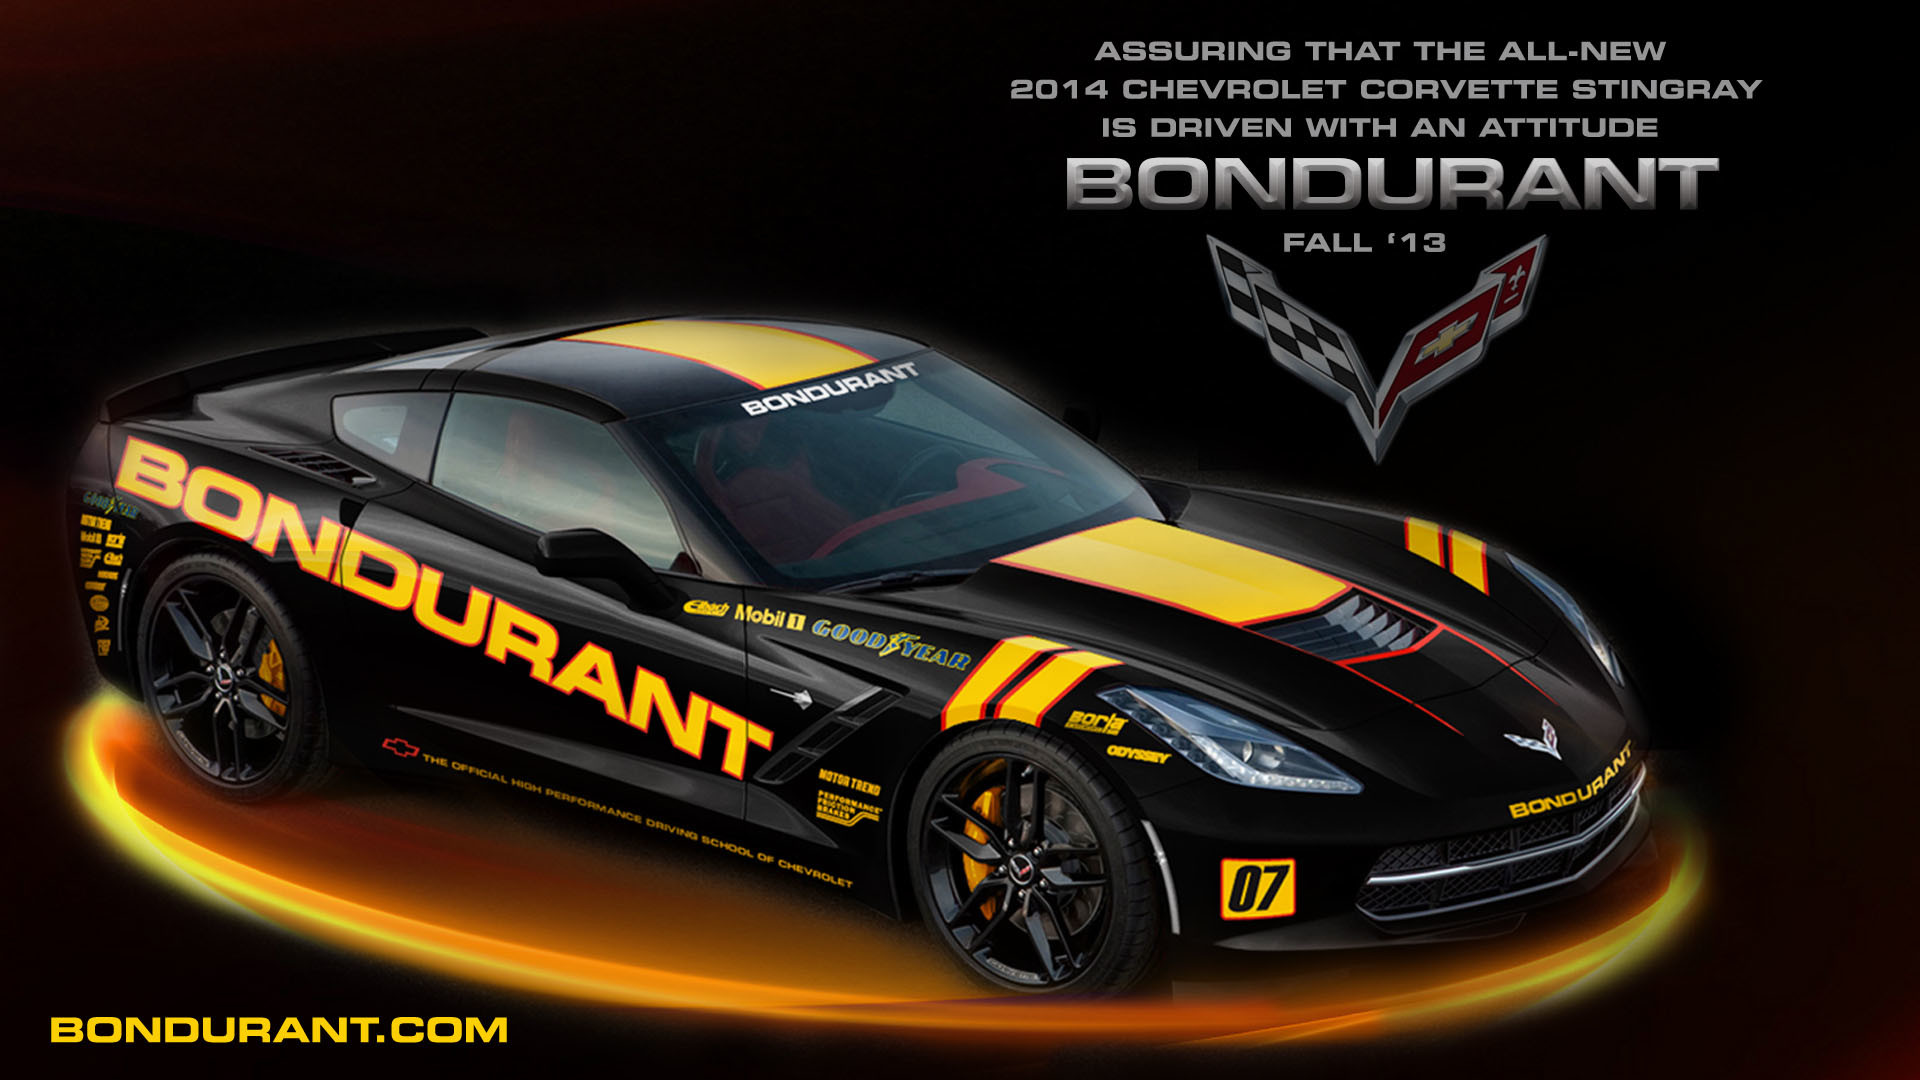 1920x1080 [Wallpaper] Imagine the 2014 Corvette Stingray in Bondurant Livery